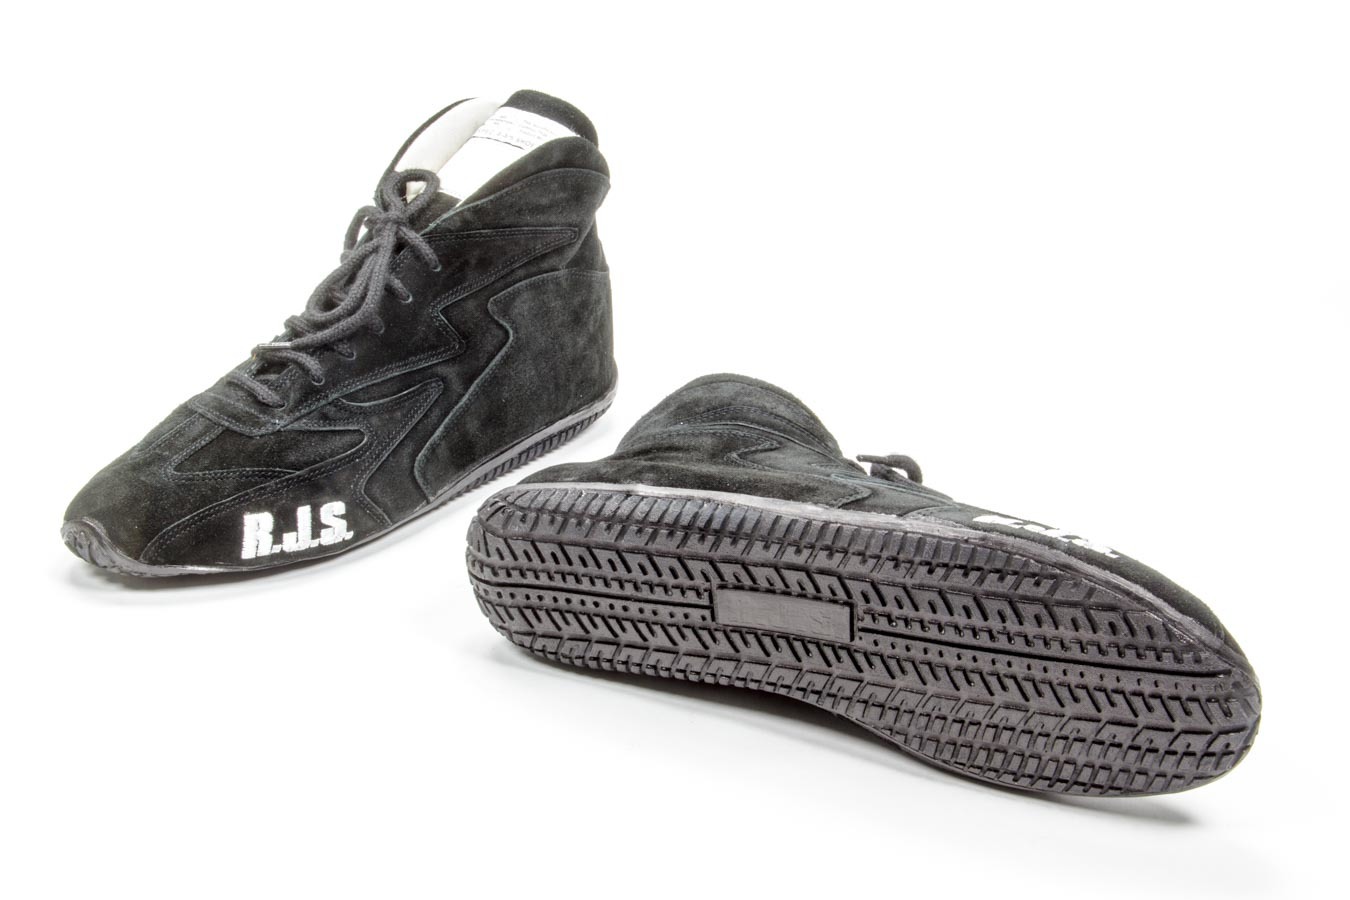 RJS, Redline Racing Shoe Mid-Top Black Size 16 SFI-5